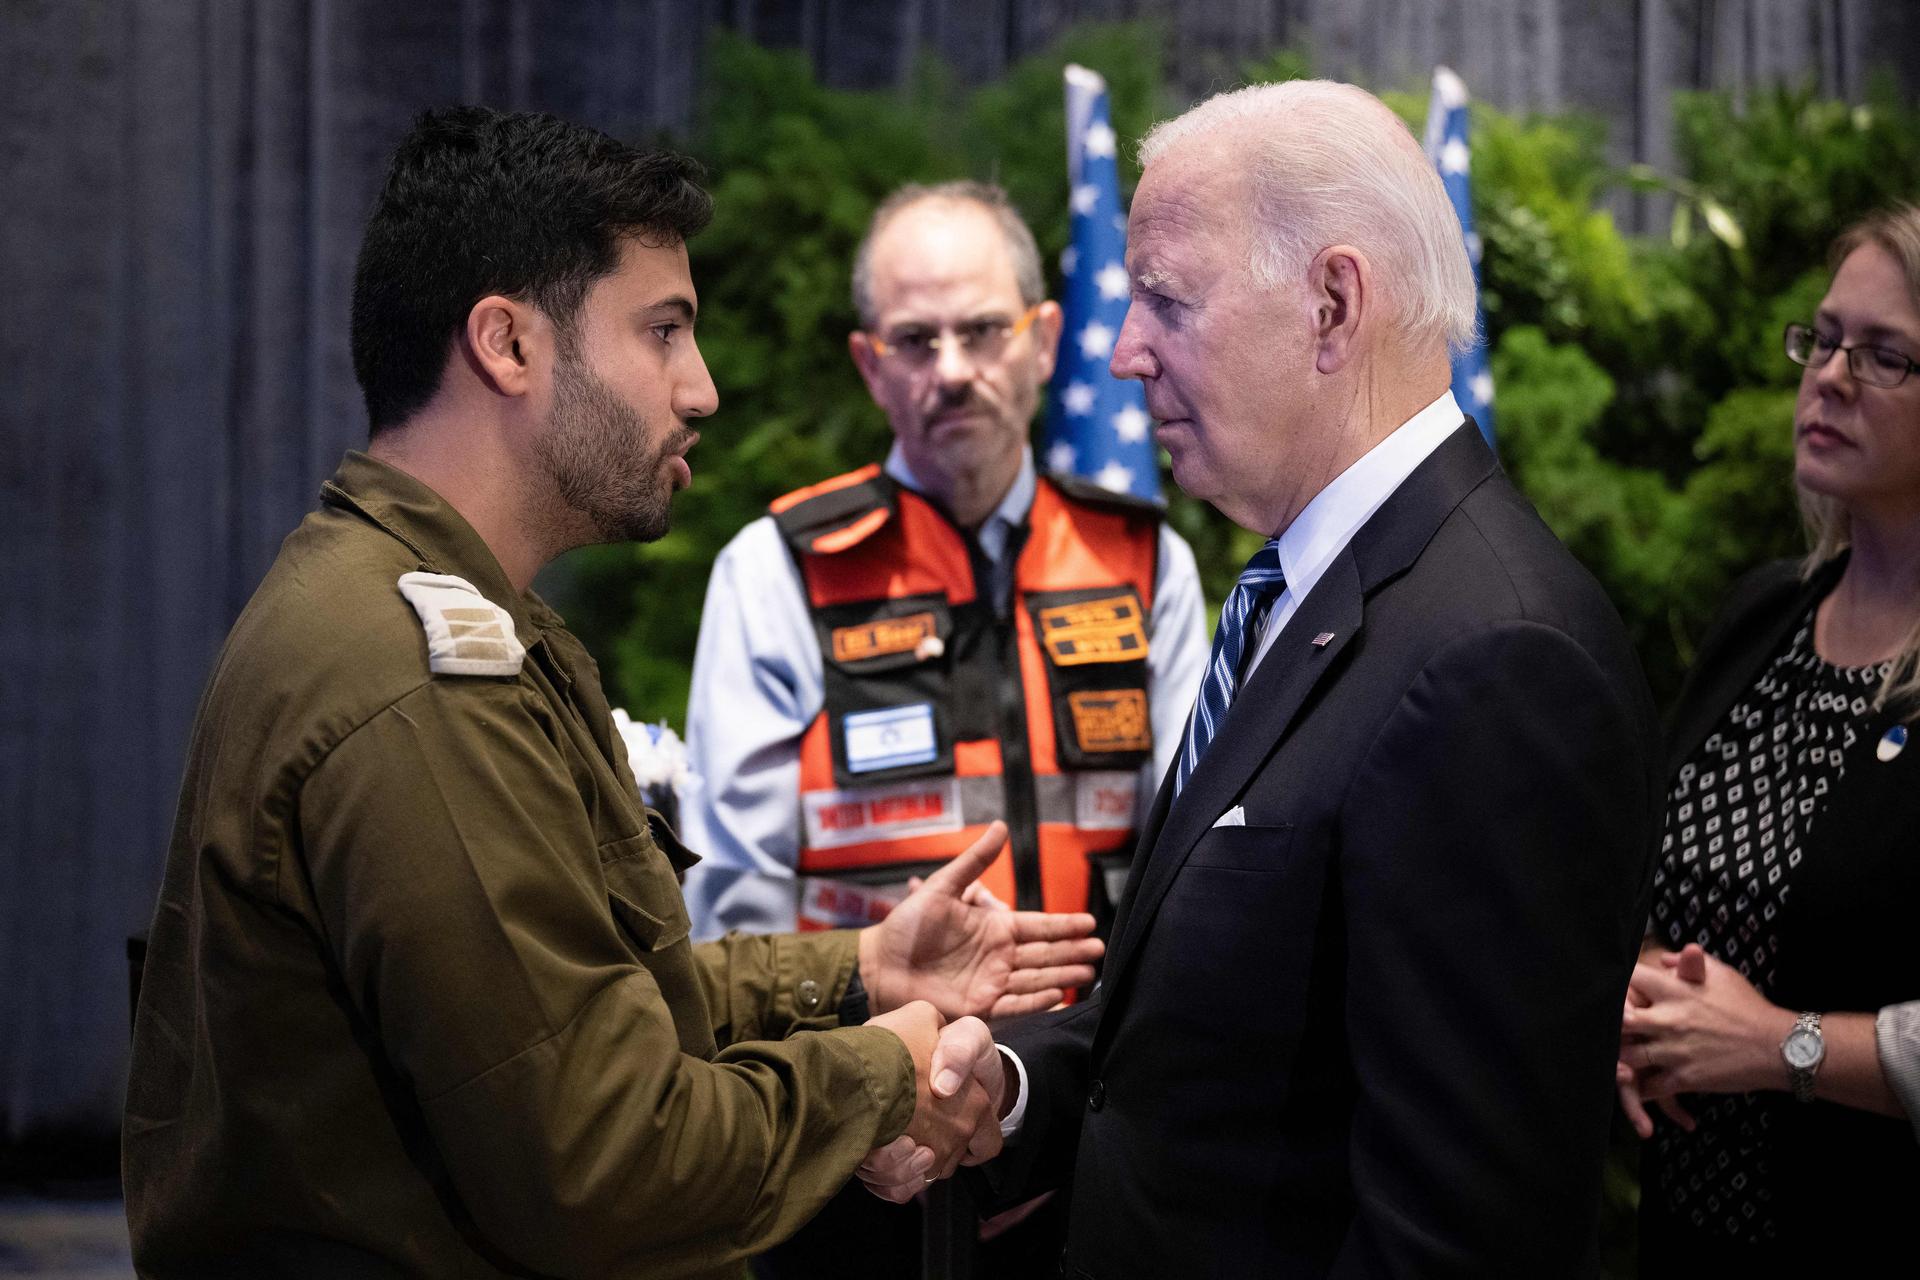 President Biden speaks with IDF Capt. Maor Farid while meeting Israelis affected by the war in Tel Aviv on Wednesday. (BRENDAN SMIALOWSKI/AFP via Getty Images)